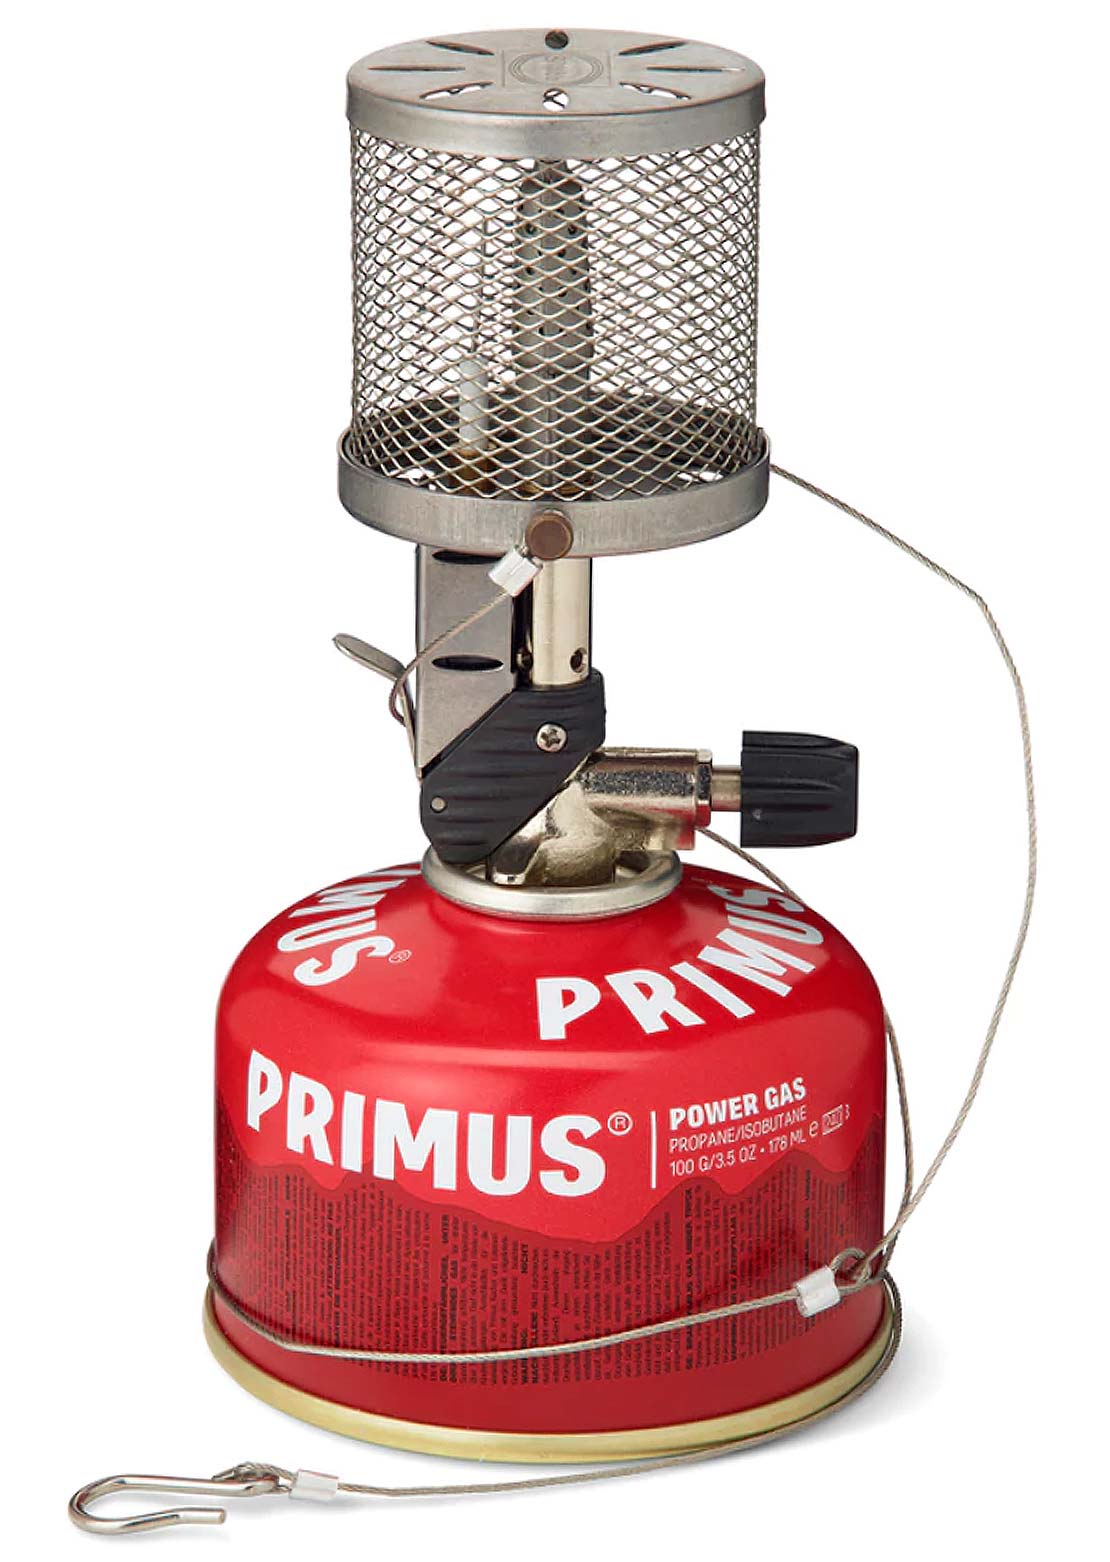 Primus Micron Lantern